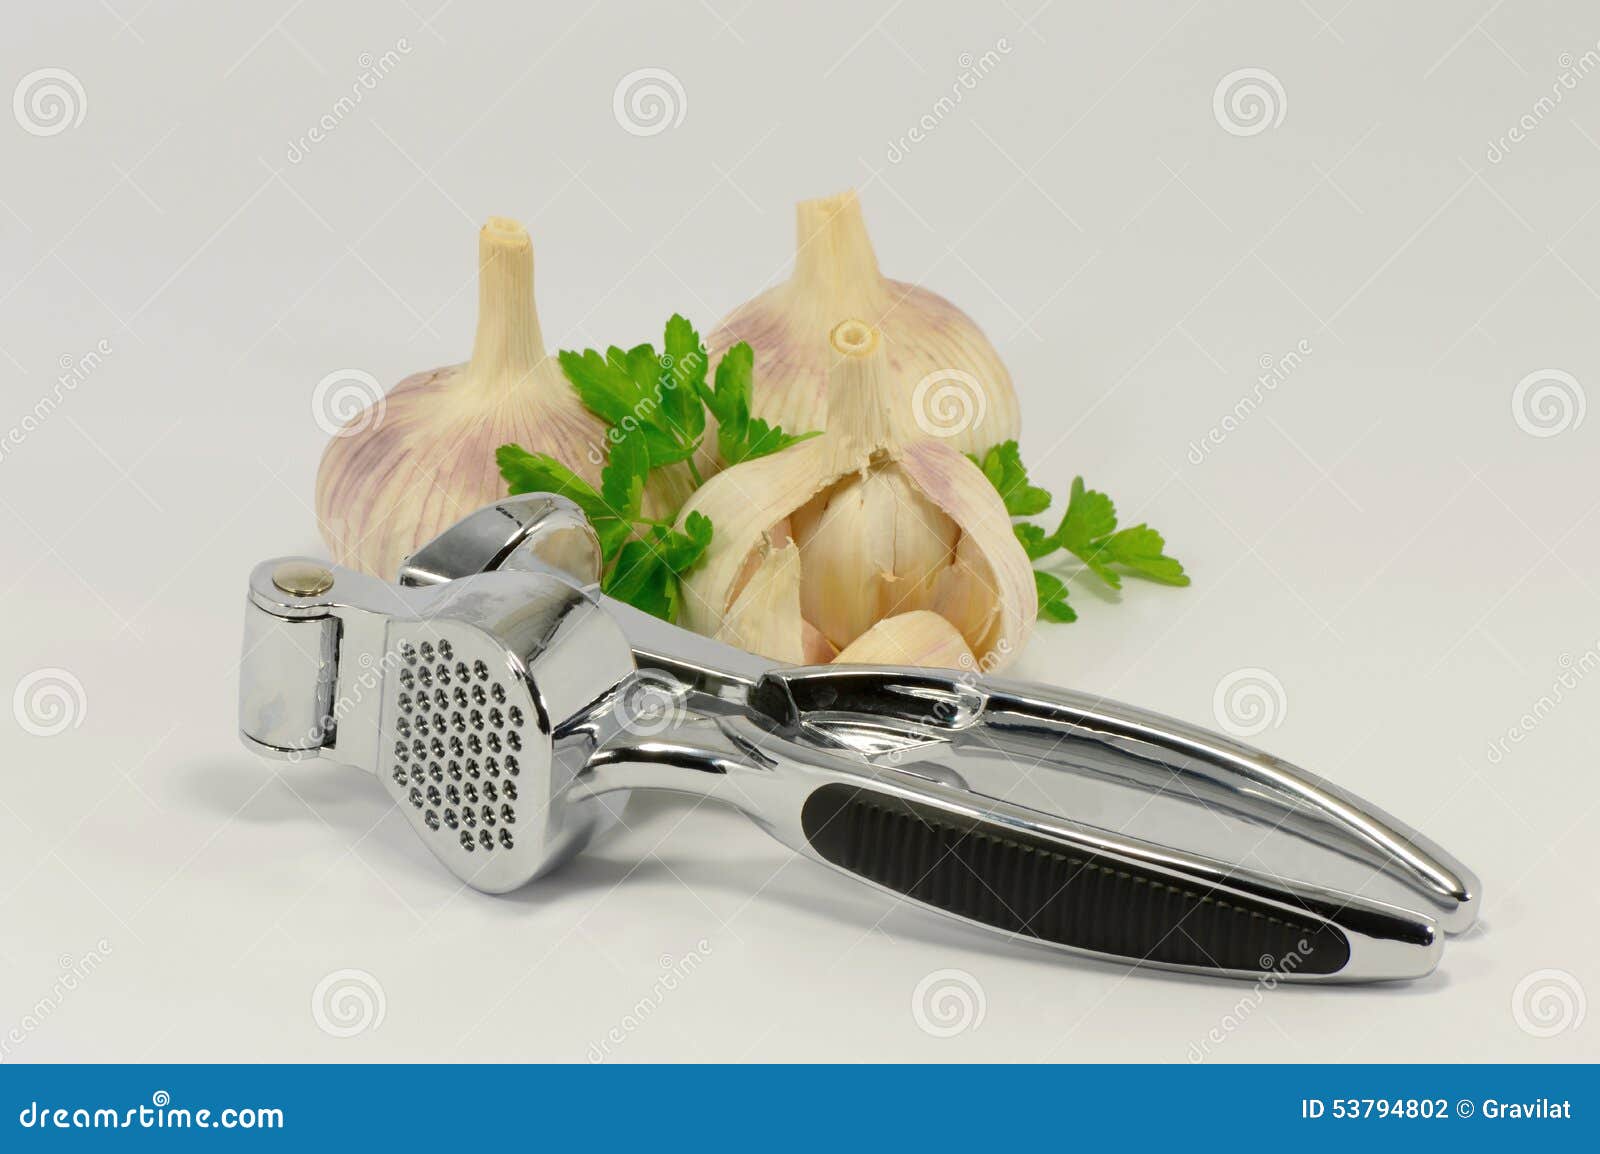 Garlic and a garlic press on a white background.